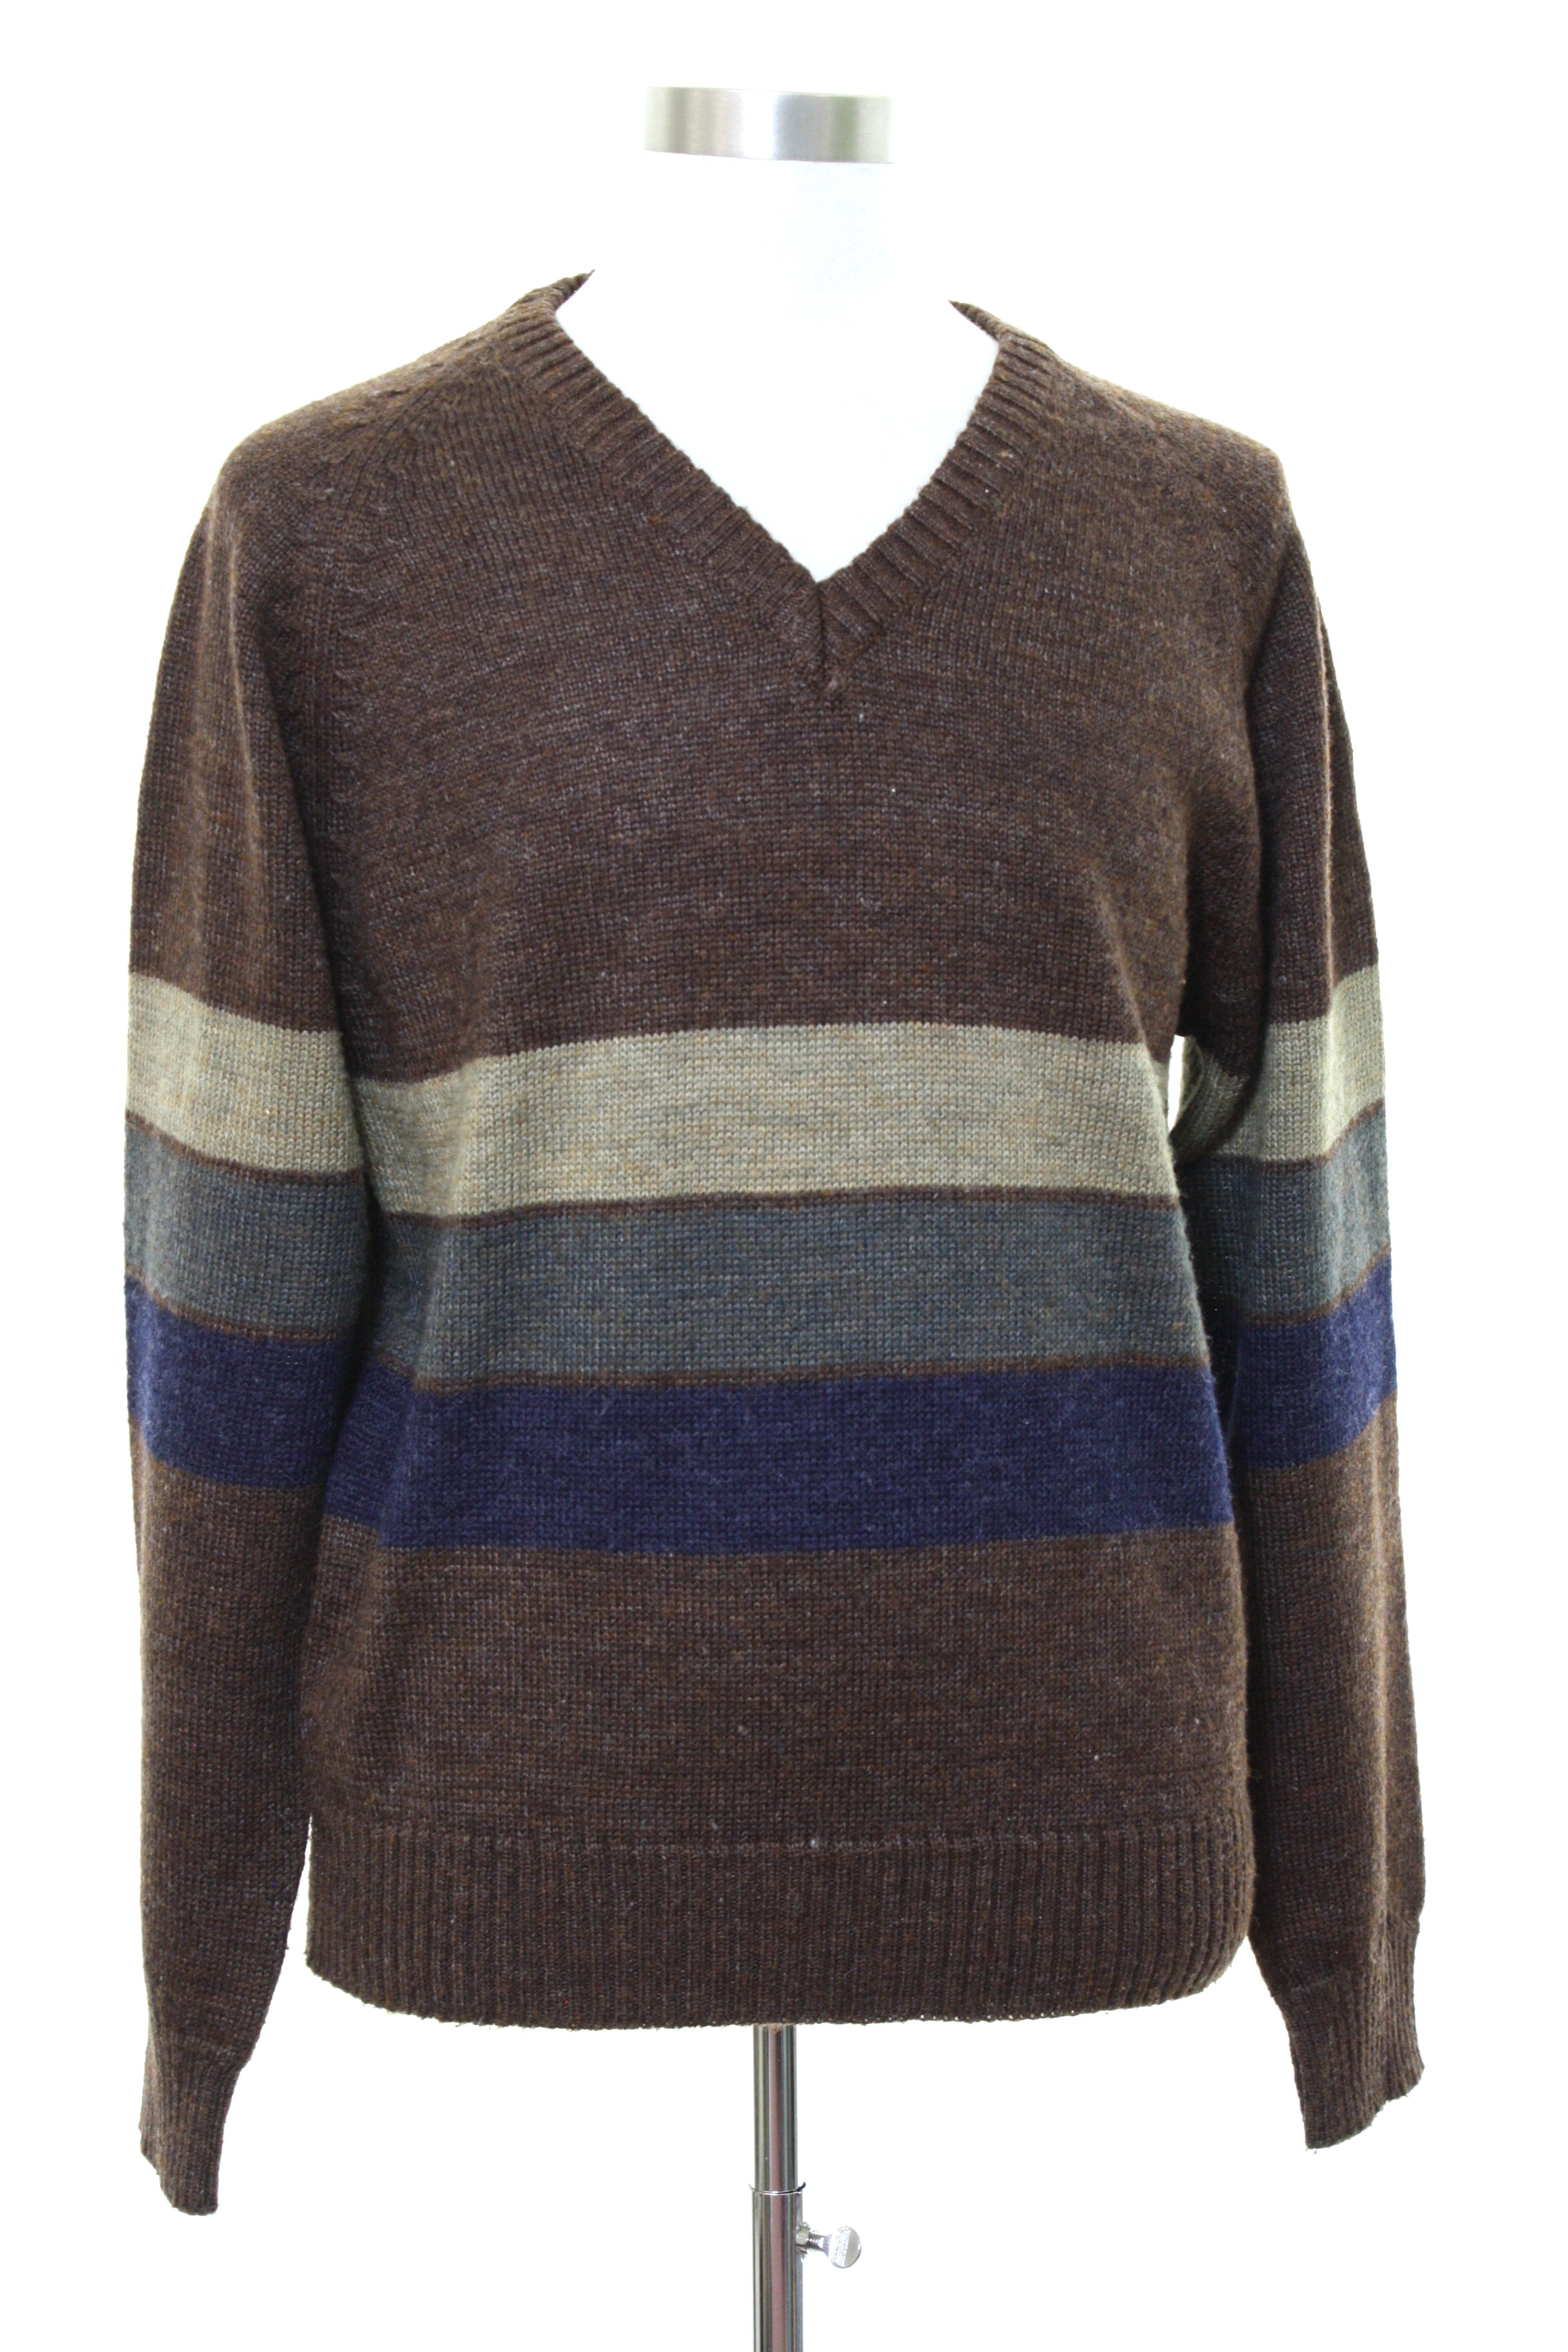 Retro 80's Sweater: Late 80s or Early 90s -Puritan- Mens heathered dark ...